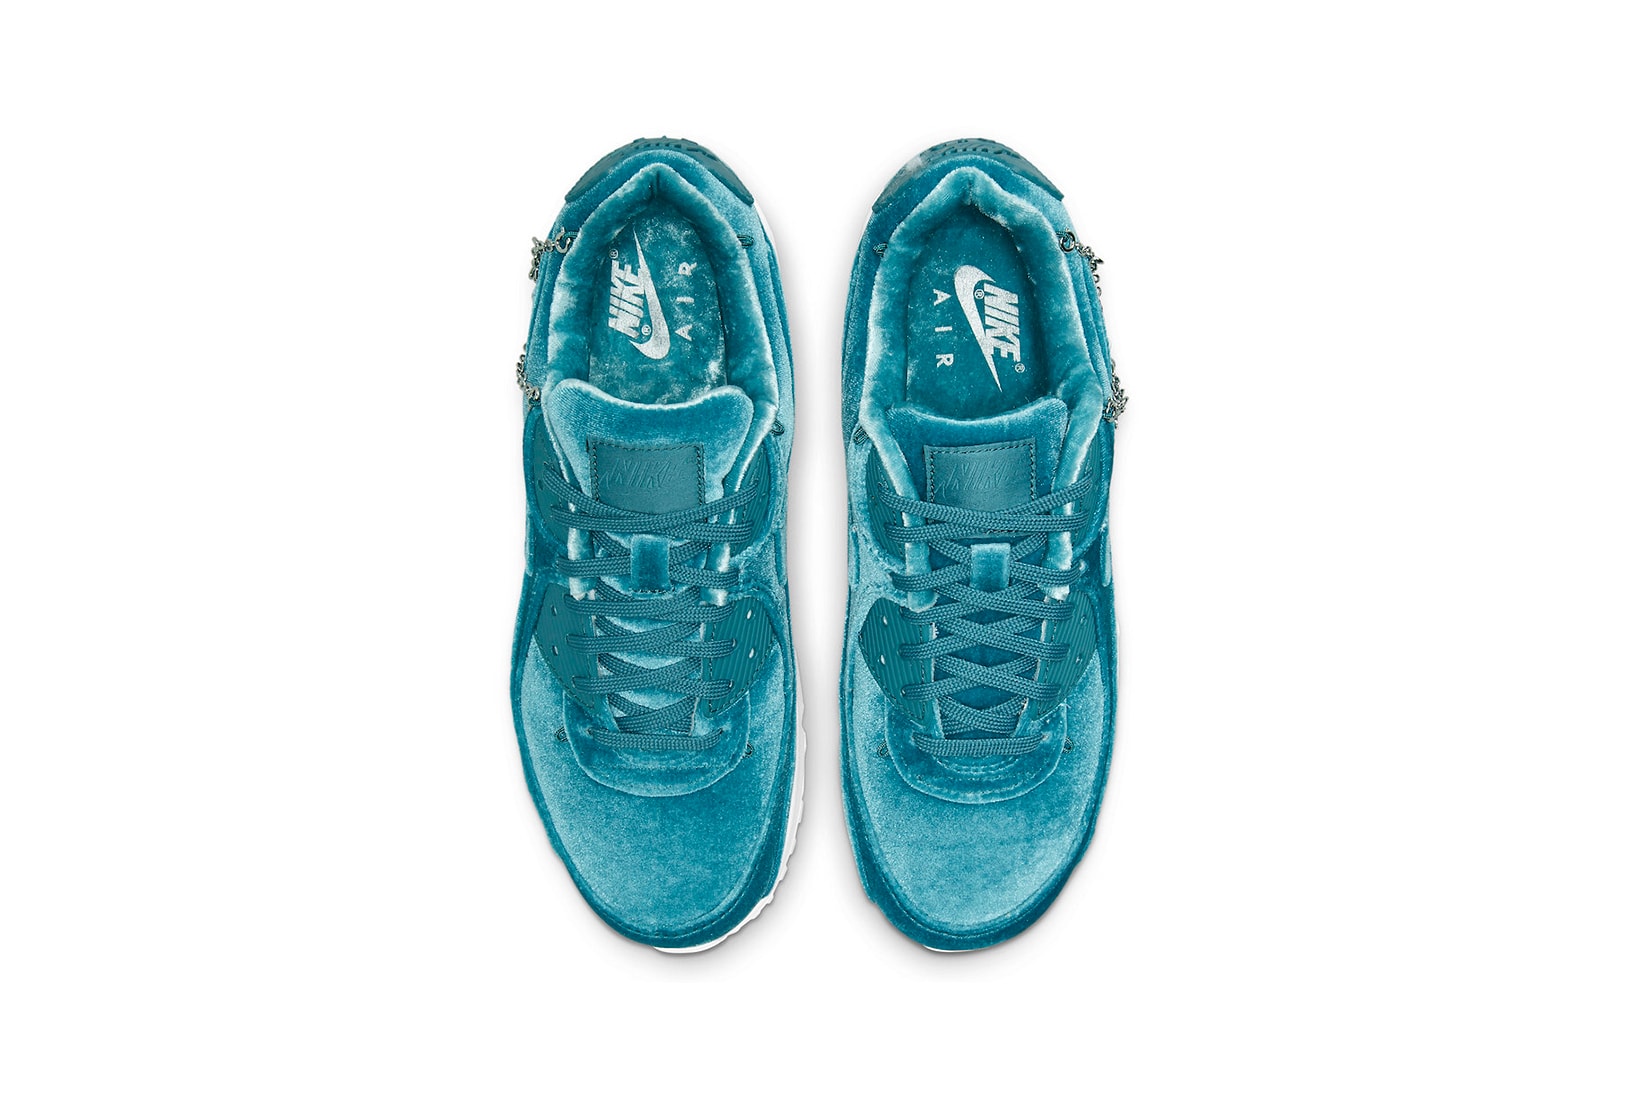 Nike Air Max 90 AM90 Lucky Charms Ash Green Metallic Silver Blue Sneakers Footwear Kicks Shoes